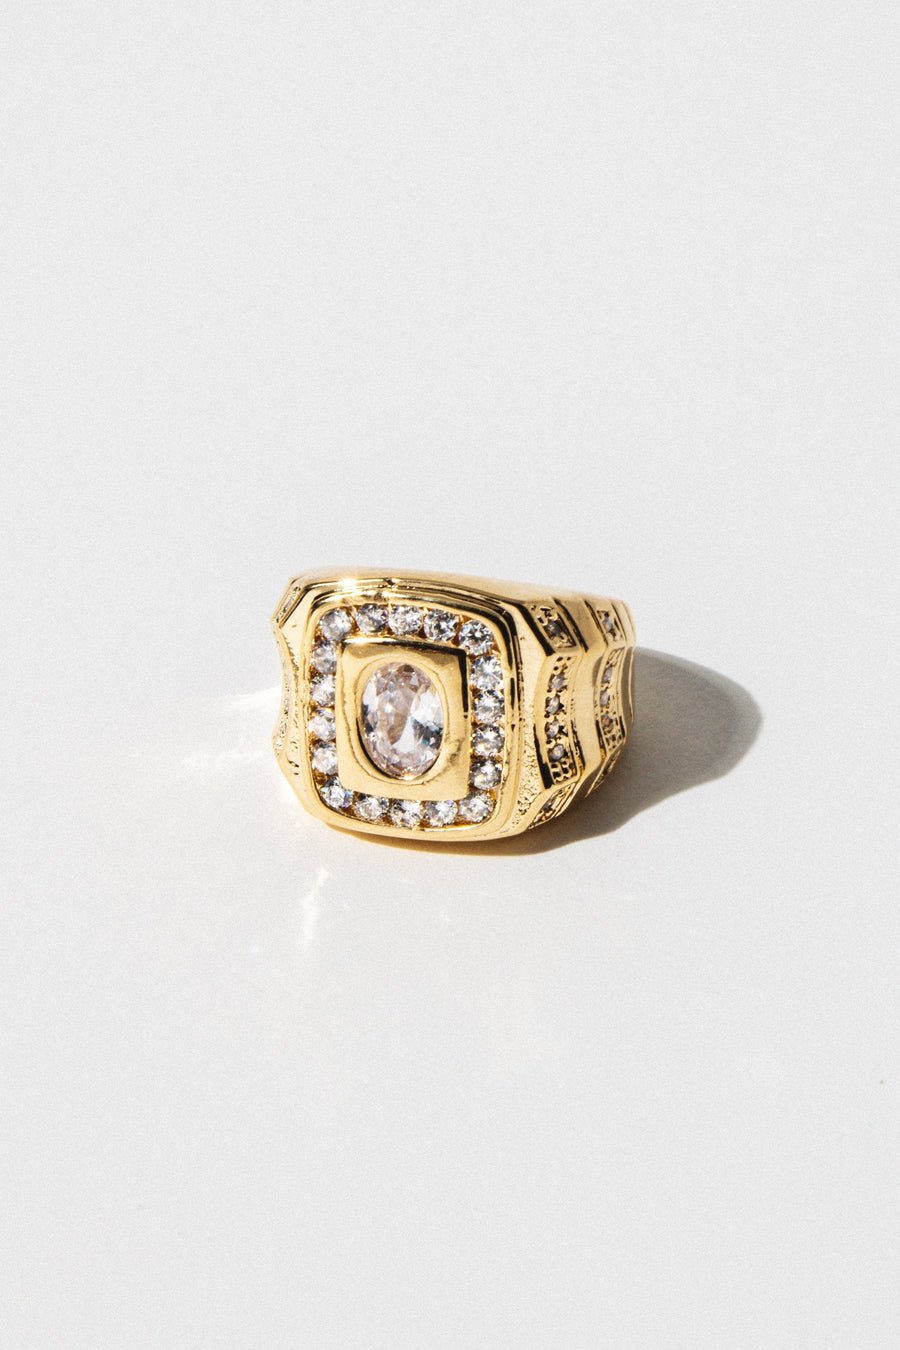 Sparrow Jewelry US 7 / Gold Varsity Ring